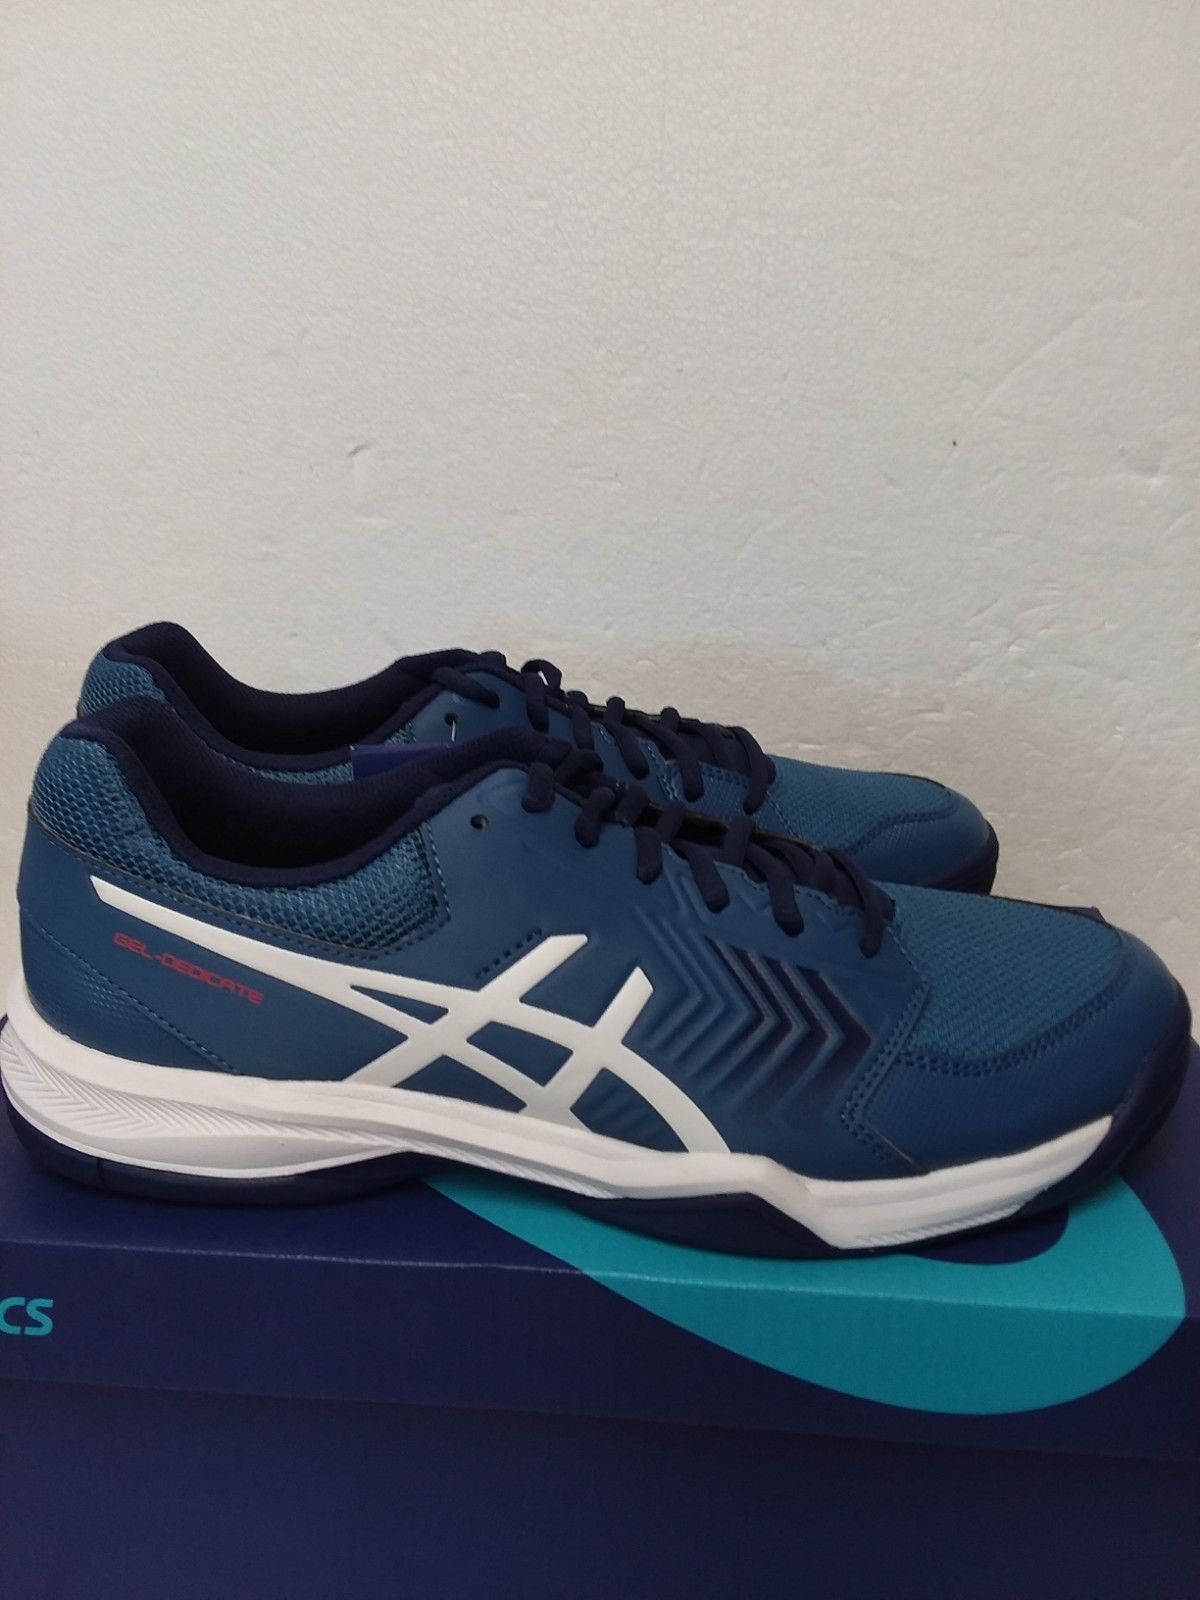 ASICS Men's Gel-Dedicate 5 Tennis Shoe - Azure/lWhite Size 10.5 - Athletic